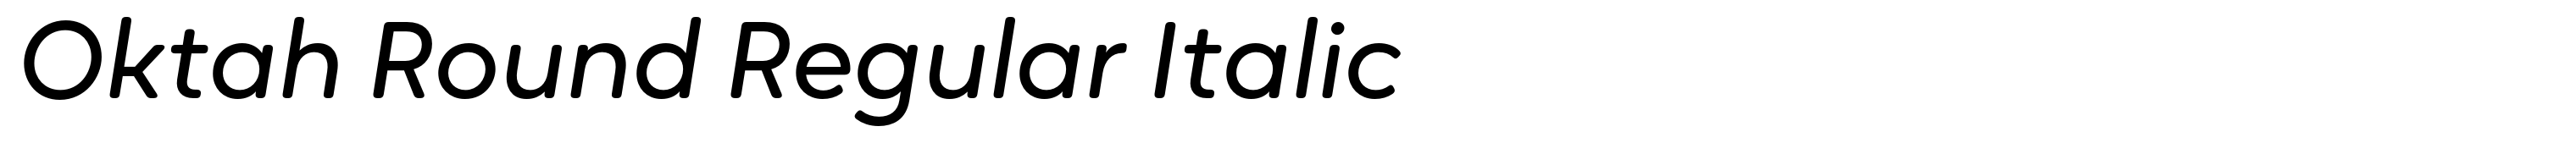 Oktah Round Regular Italic